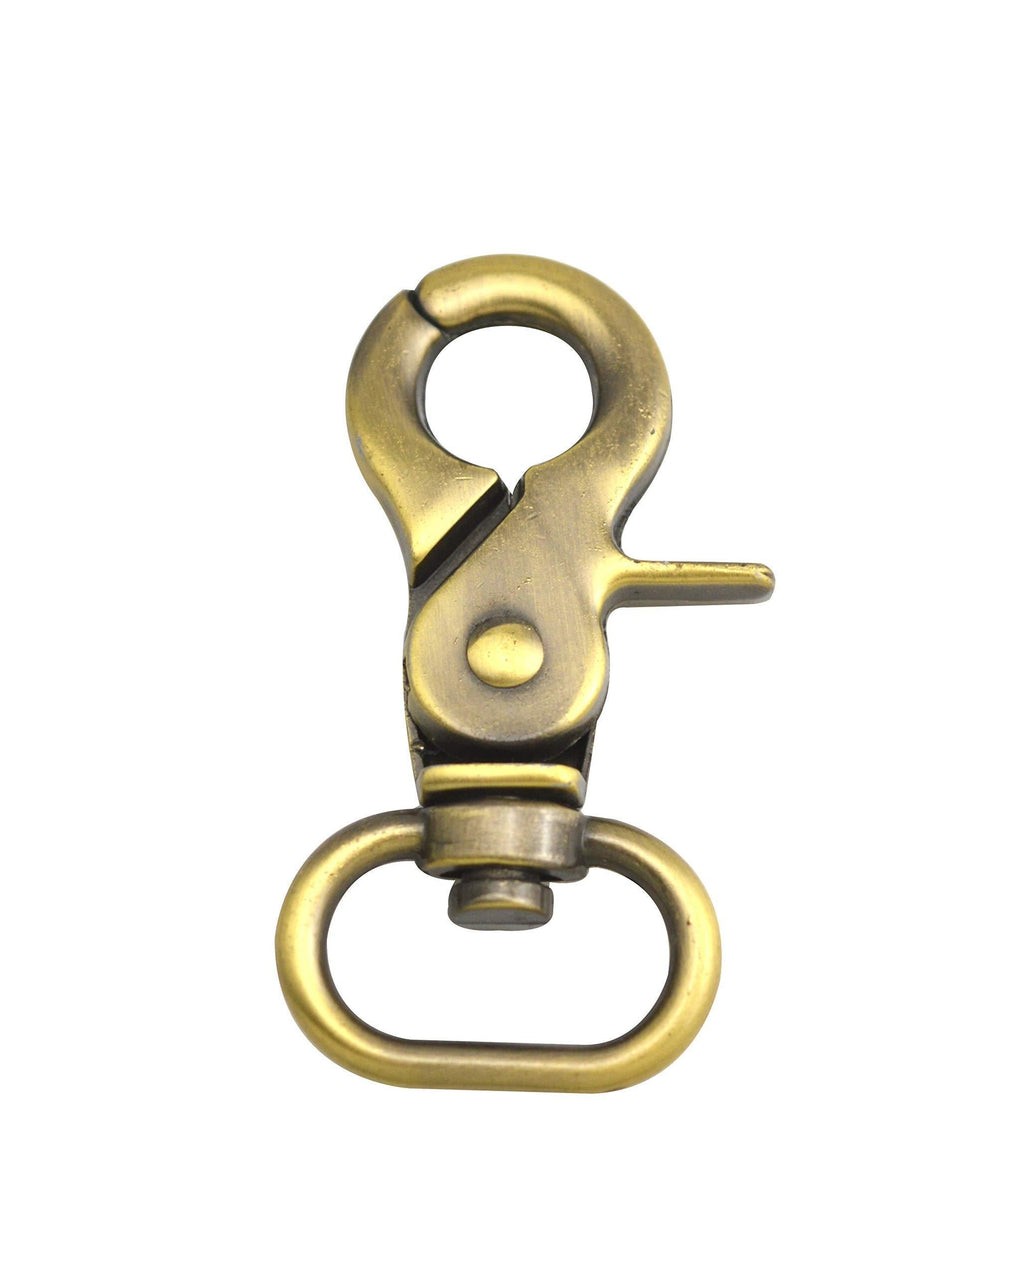  [AUSTRALIA] - Wuuycoky 0.8" Inner Diameter Oval Ring Shinning Antique Brass Color Pliers Buckle Lobster Clasps Swivel Snap Hooks Pack of 6 LEN:2.1",oval ring inner Diam:0.8",6Pcs